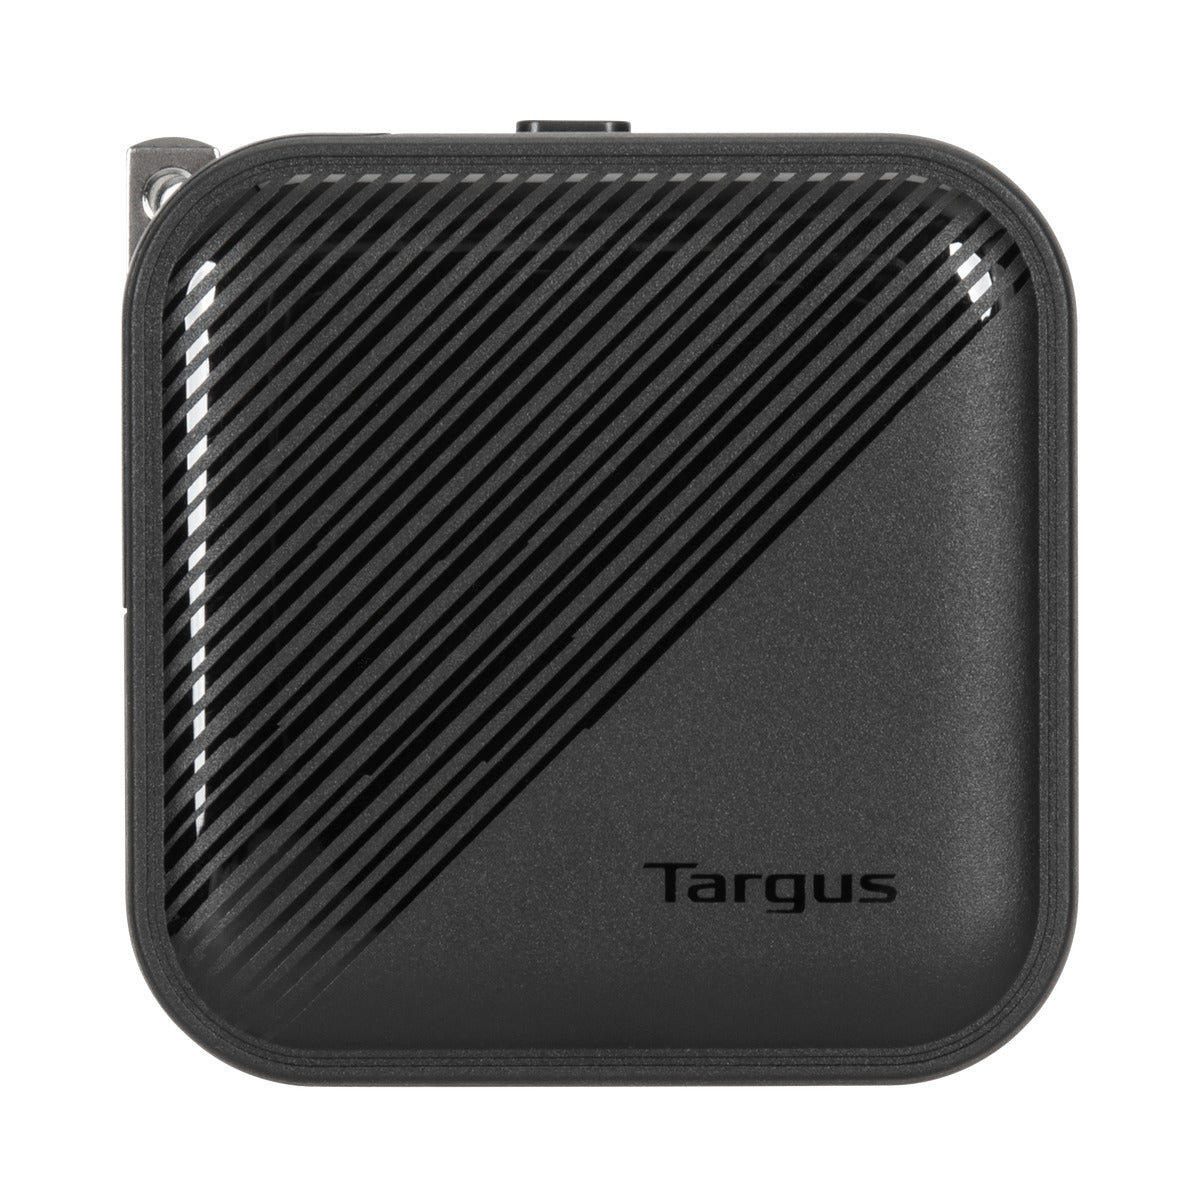 Targus APA803 65W GaN Technology Wall Charger 2 port GaN快速充電器